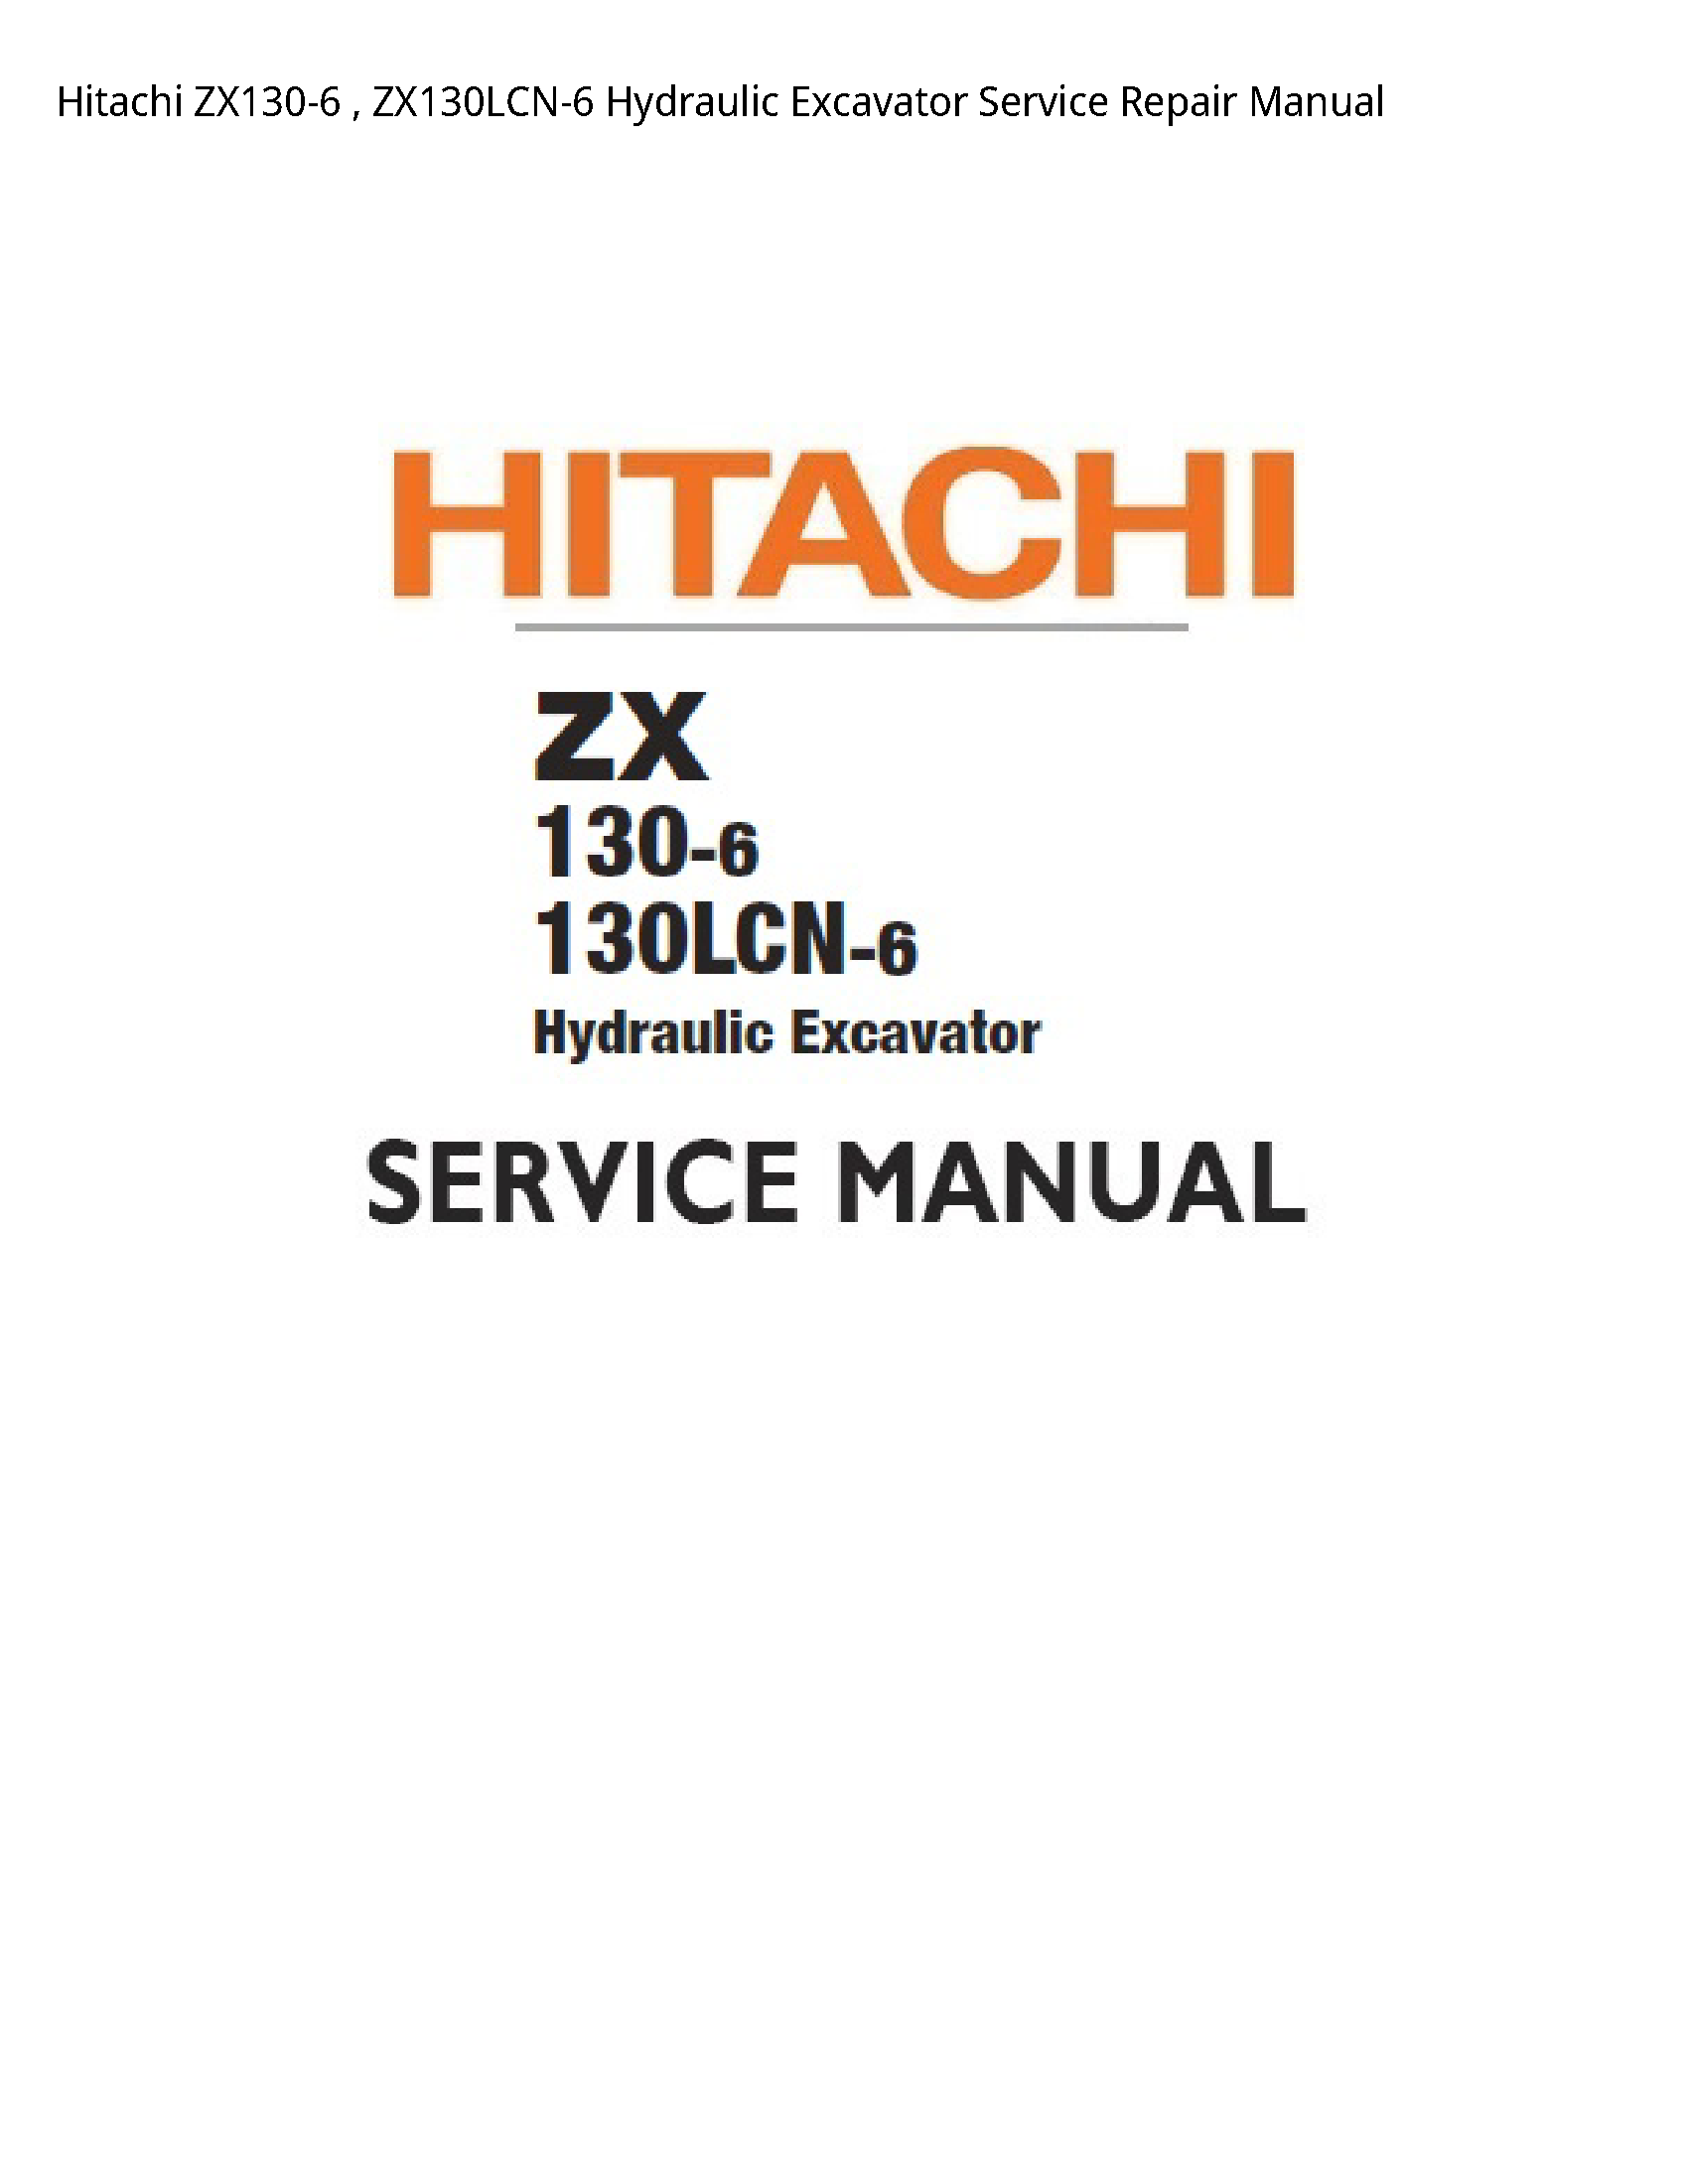 Hitachi ZX130-6 Hydraulic Excavator manual